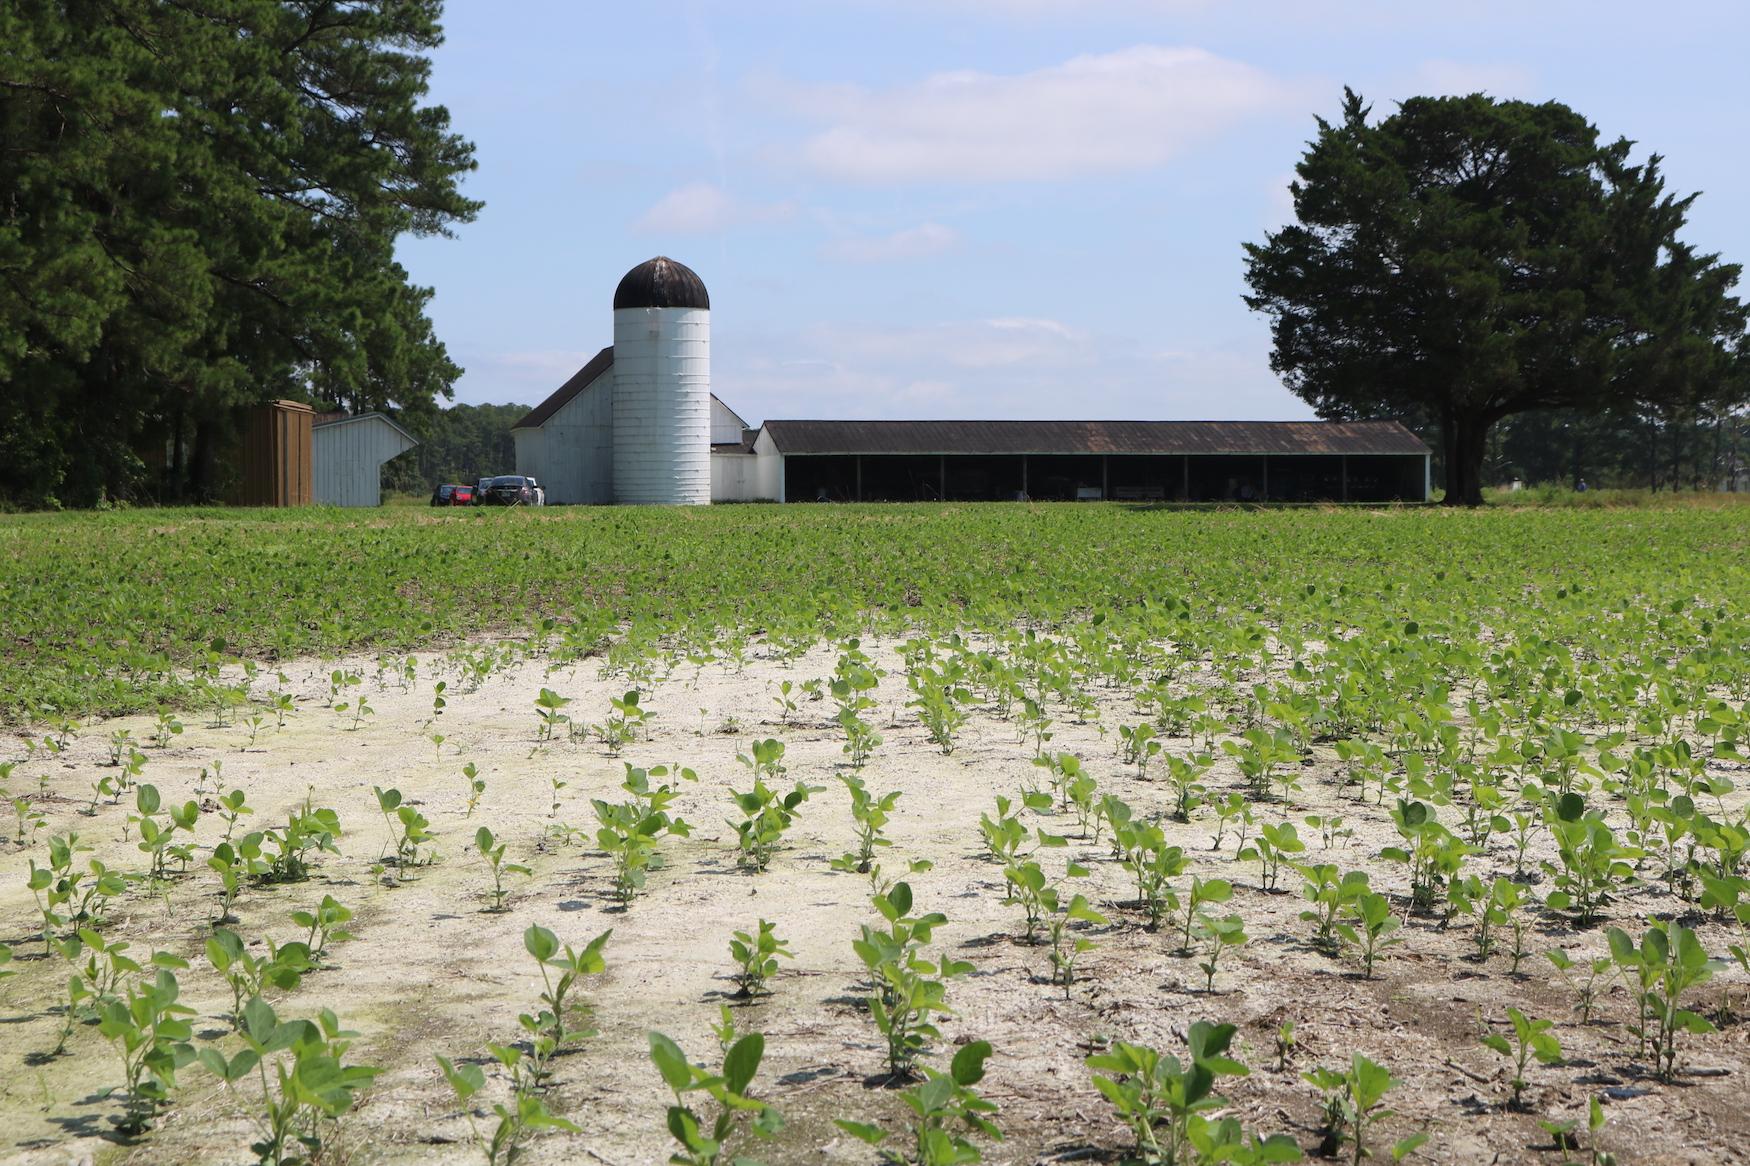 A photo of a silo in a farm field